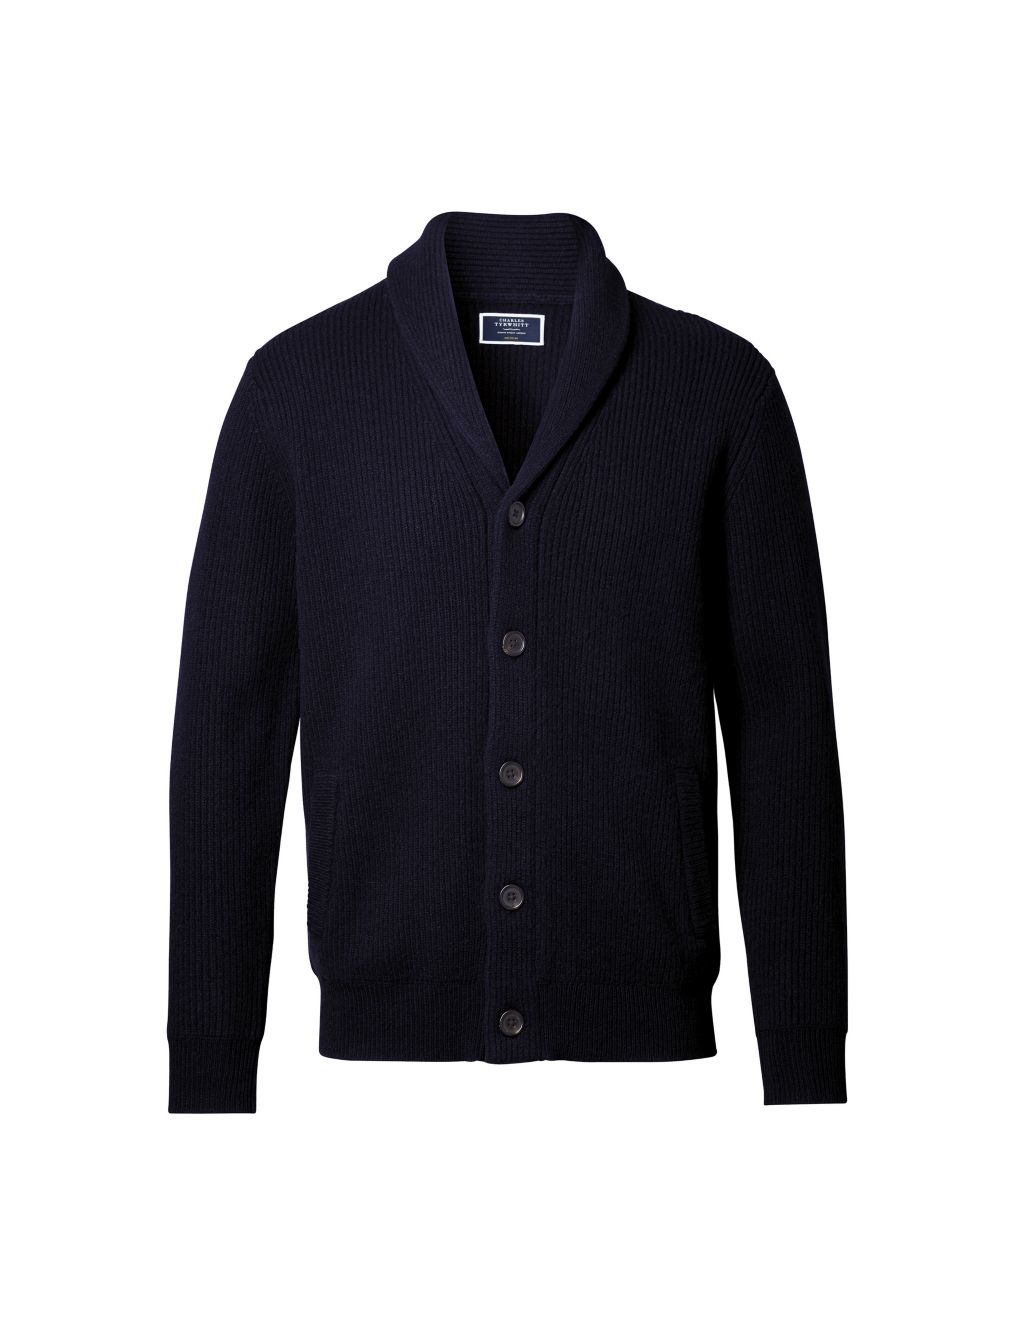 Buy Pure Merino Wool Rib Shawl Collar Cardigan | Charles Tyrwhitt | M&S